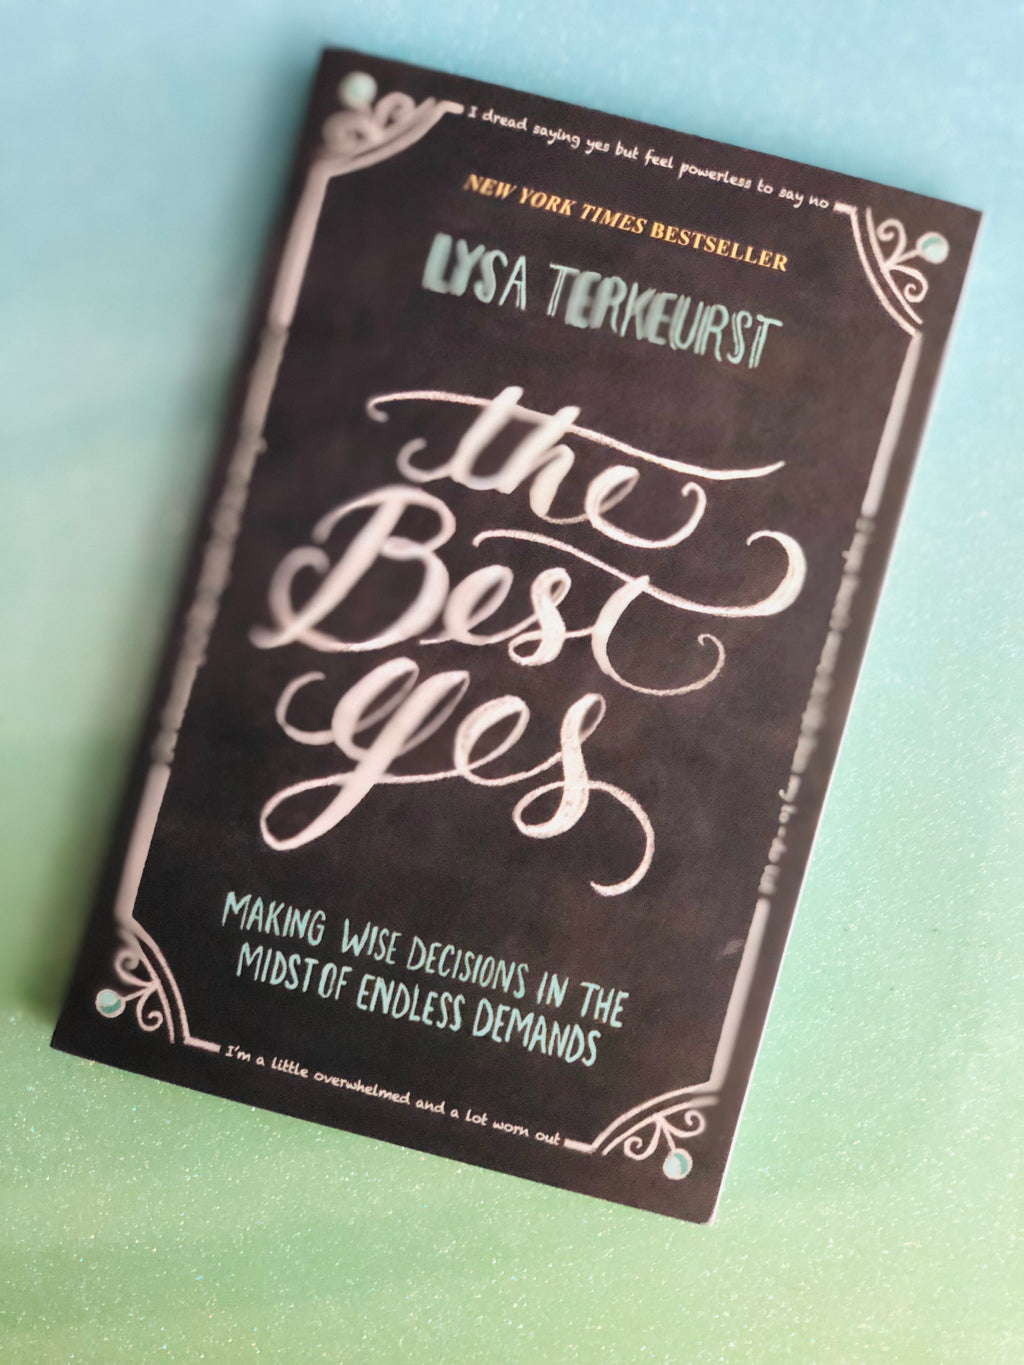 The Best Yes- By Lysa Terkeurst